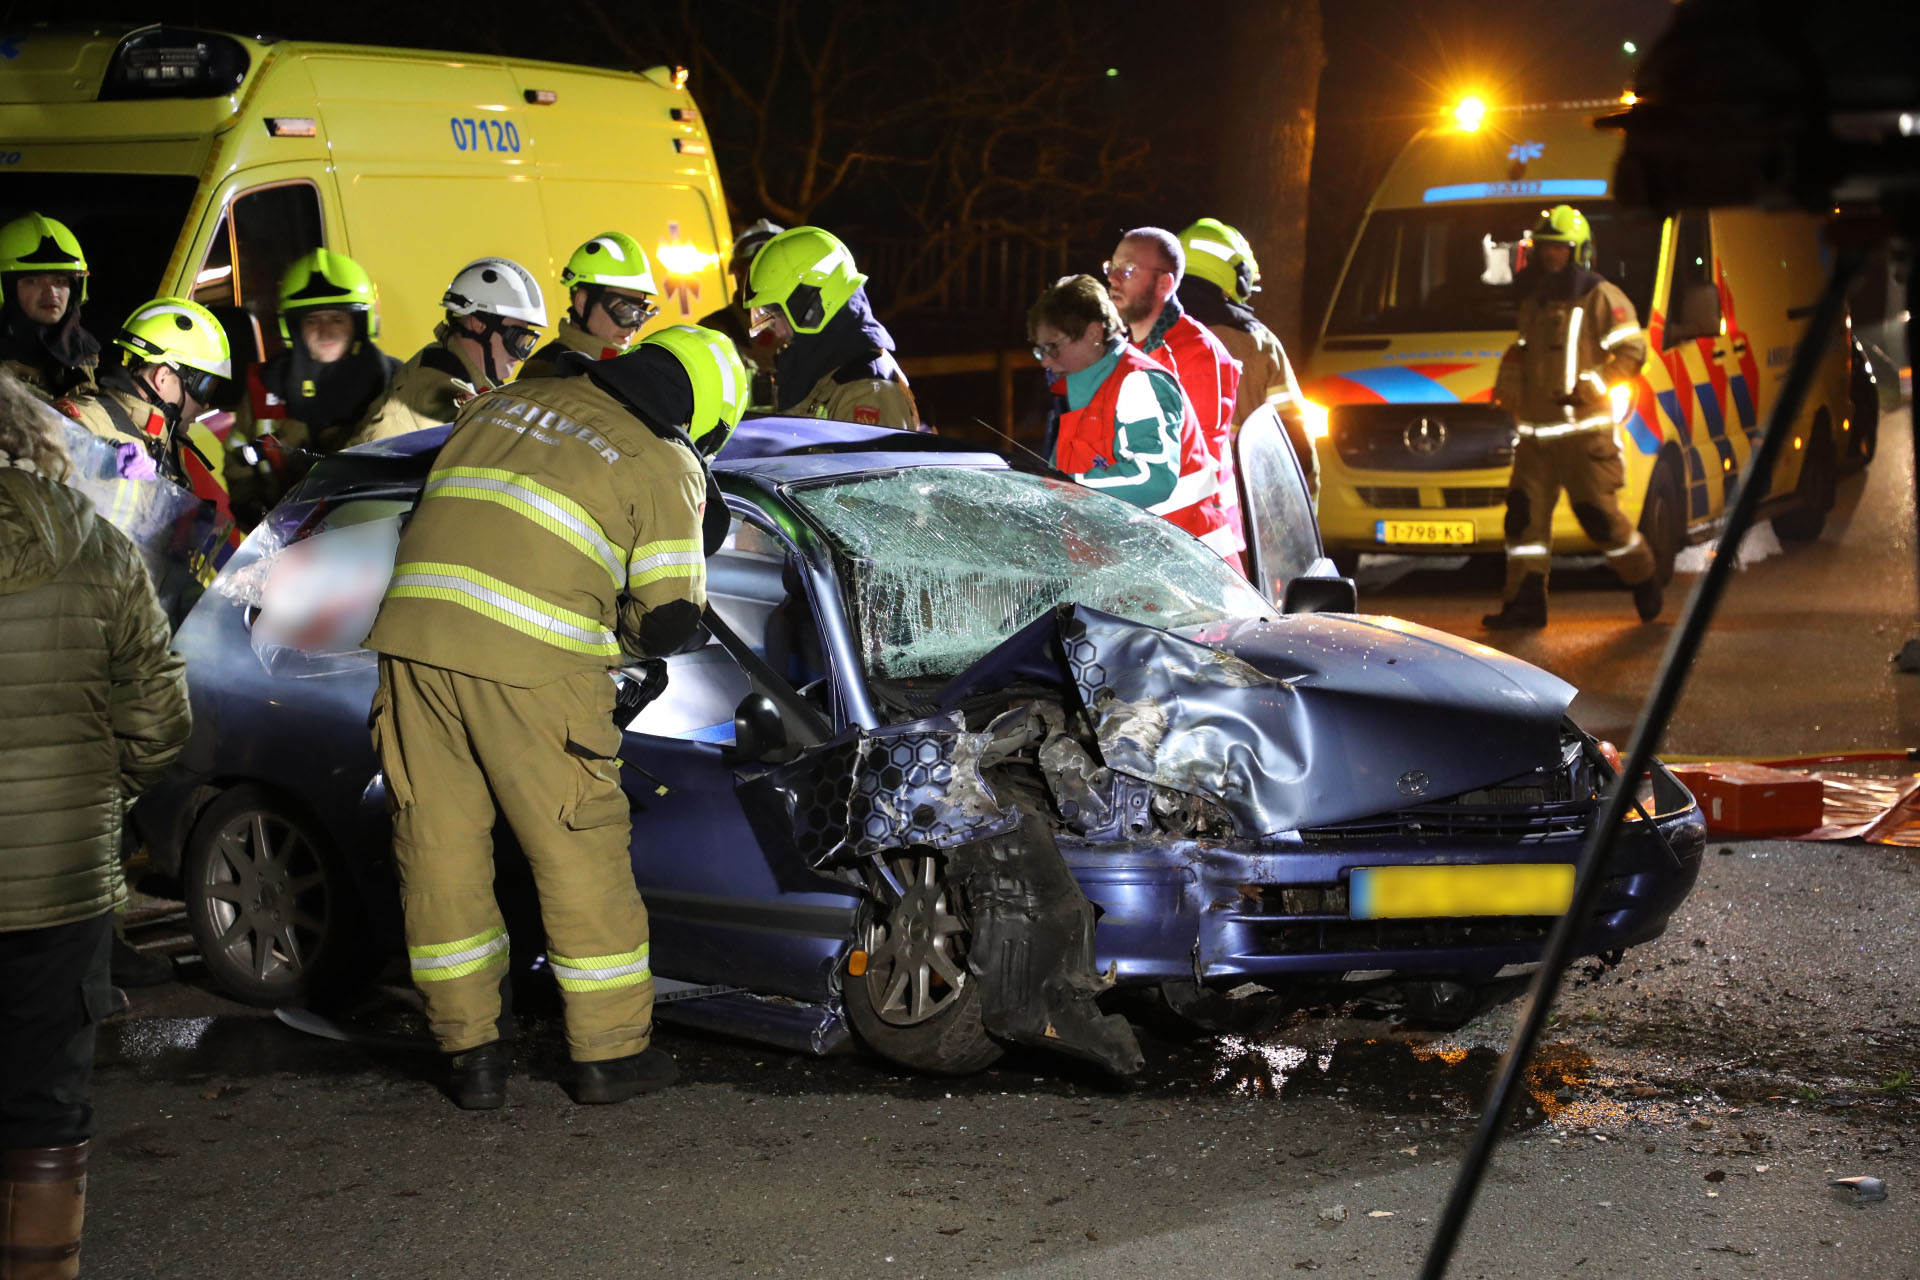 Frontale botsing in Barneveld, automobilist bekneld in voertuig